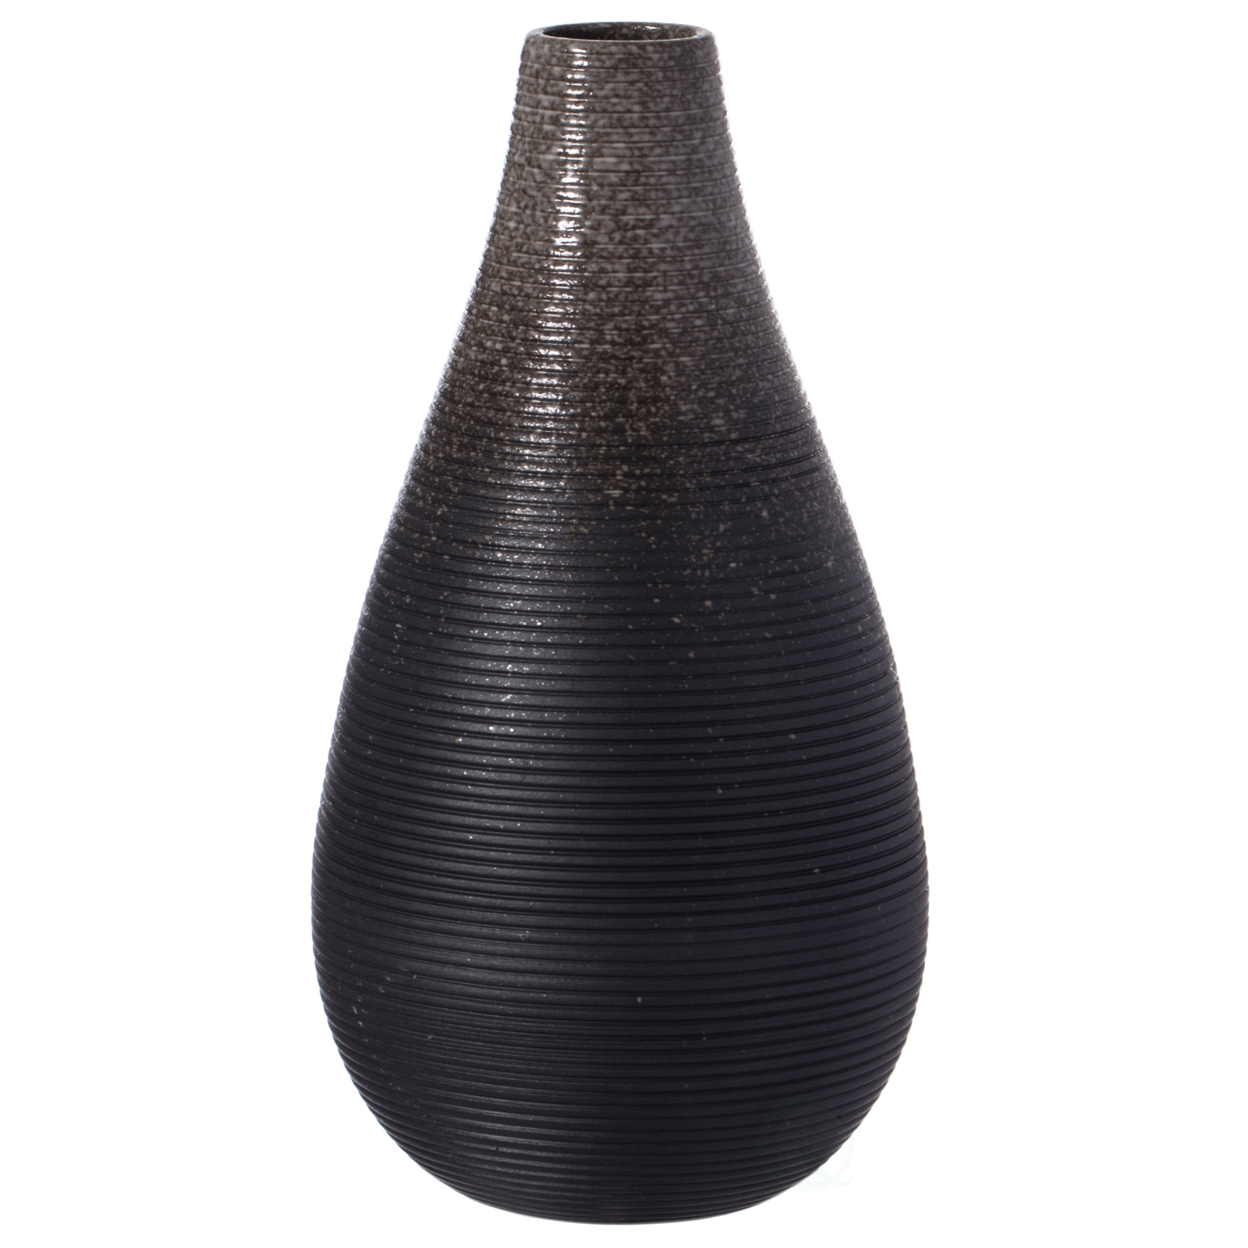 6 Inch Modern Decorative Ceramic Table Vase Ripped Design Tear Drop Shape Flower Holder, Black